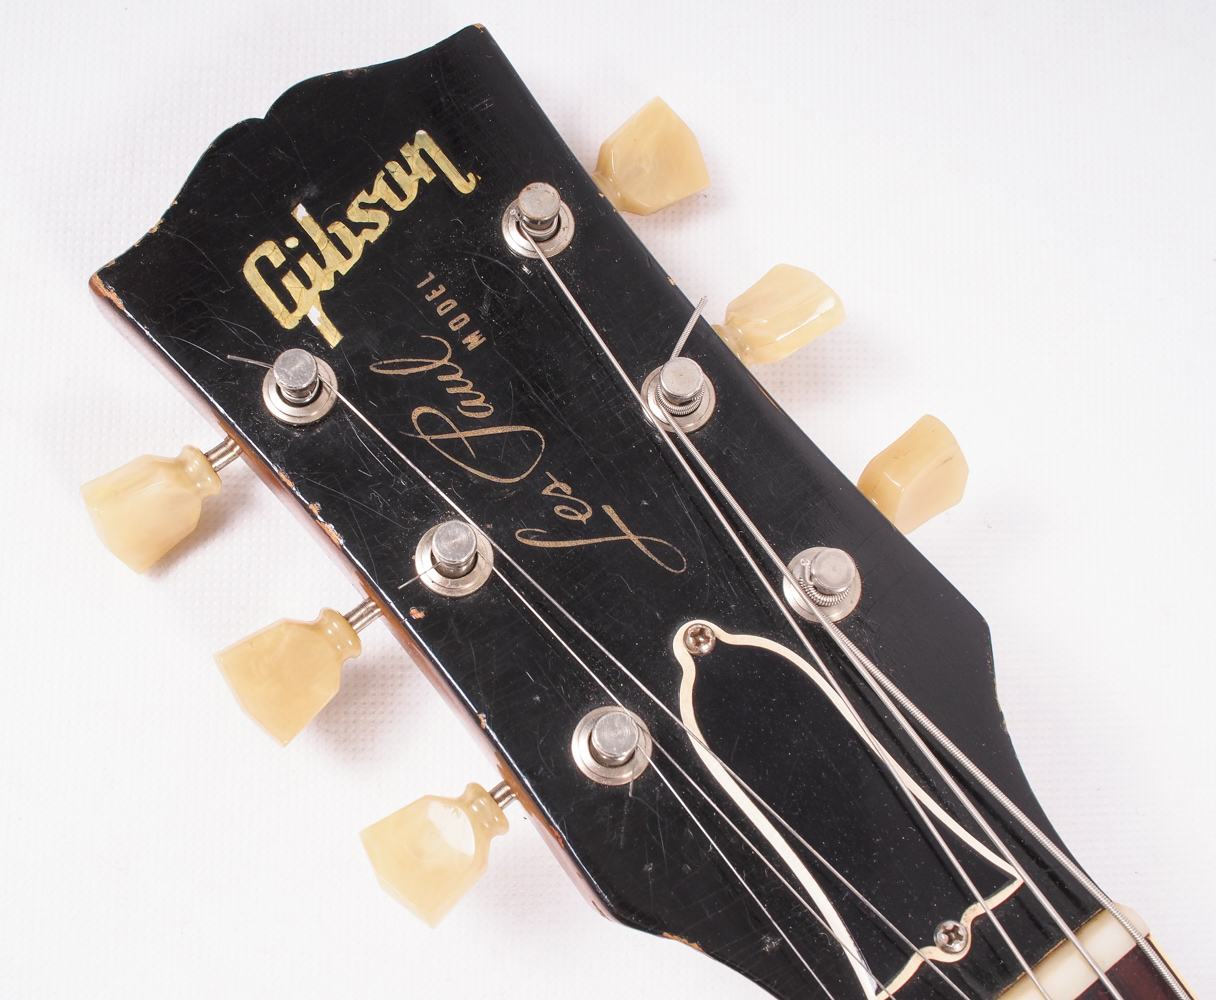 Original Gibson 1952 Les Paul Goldtop